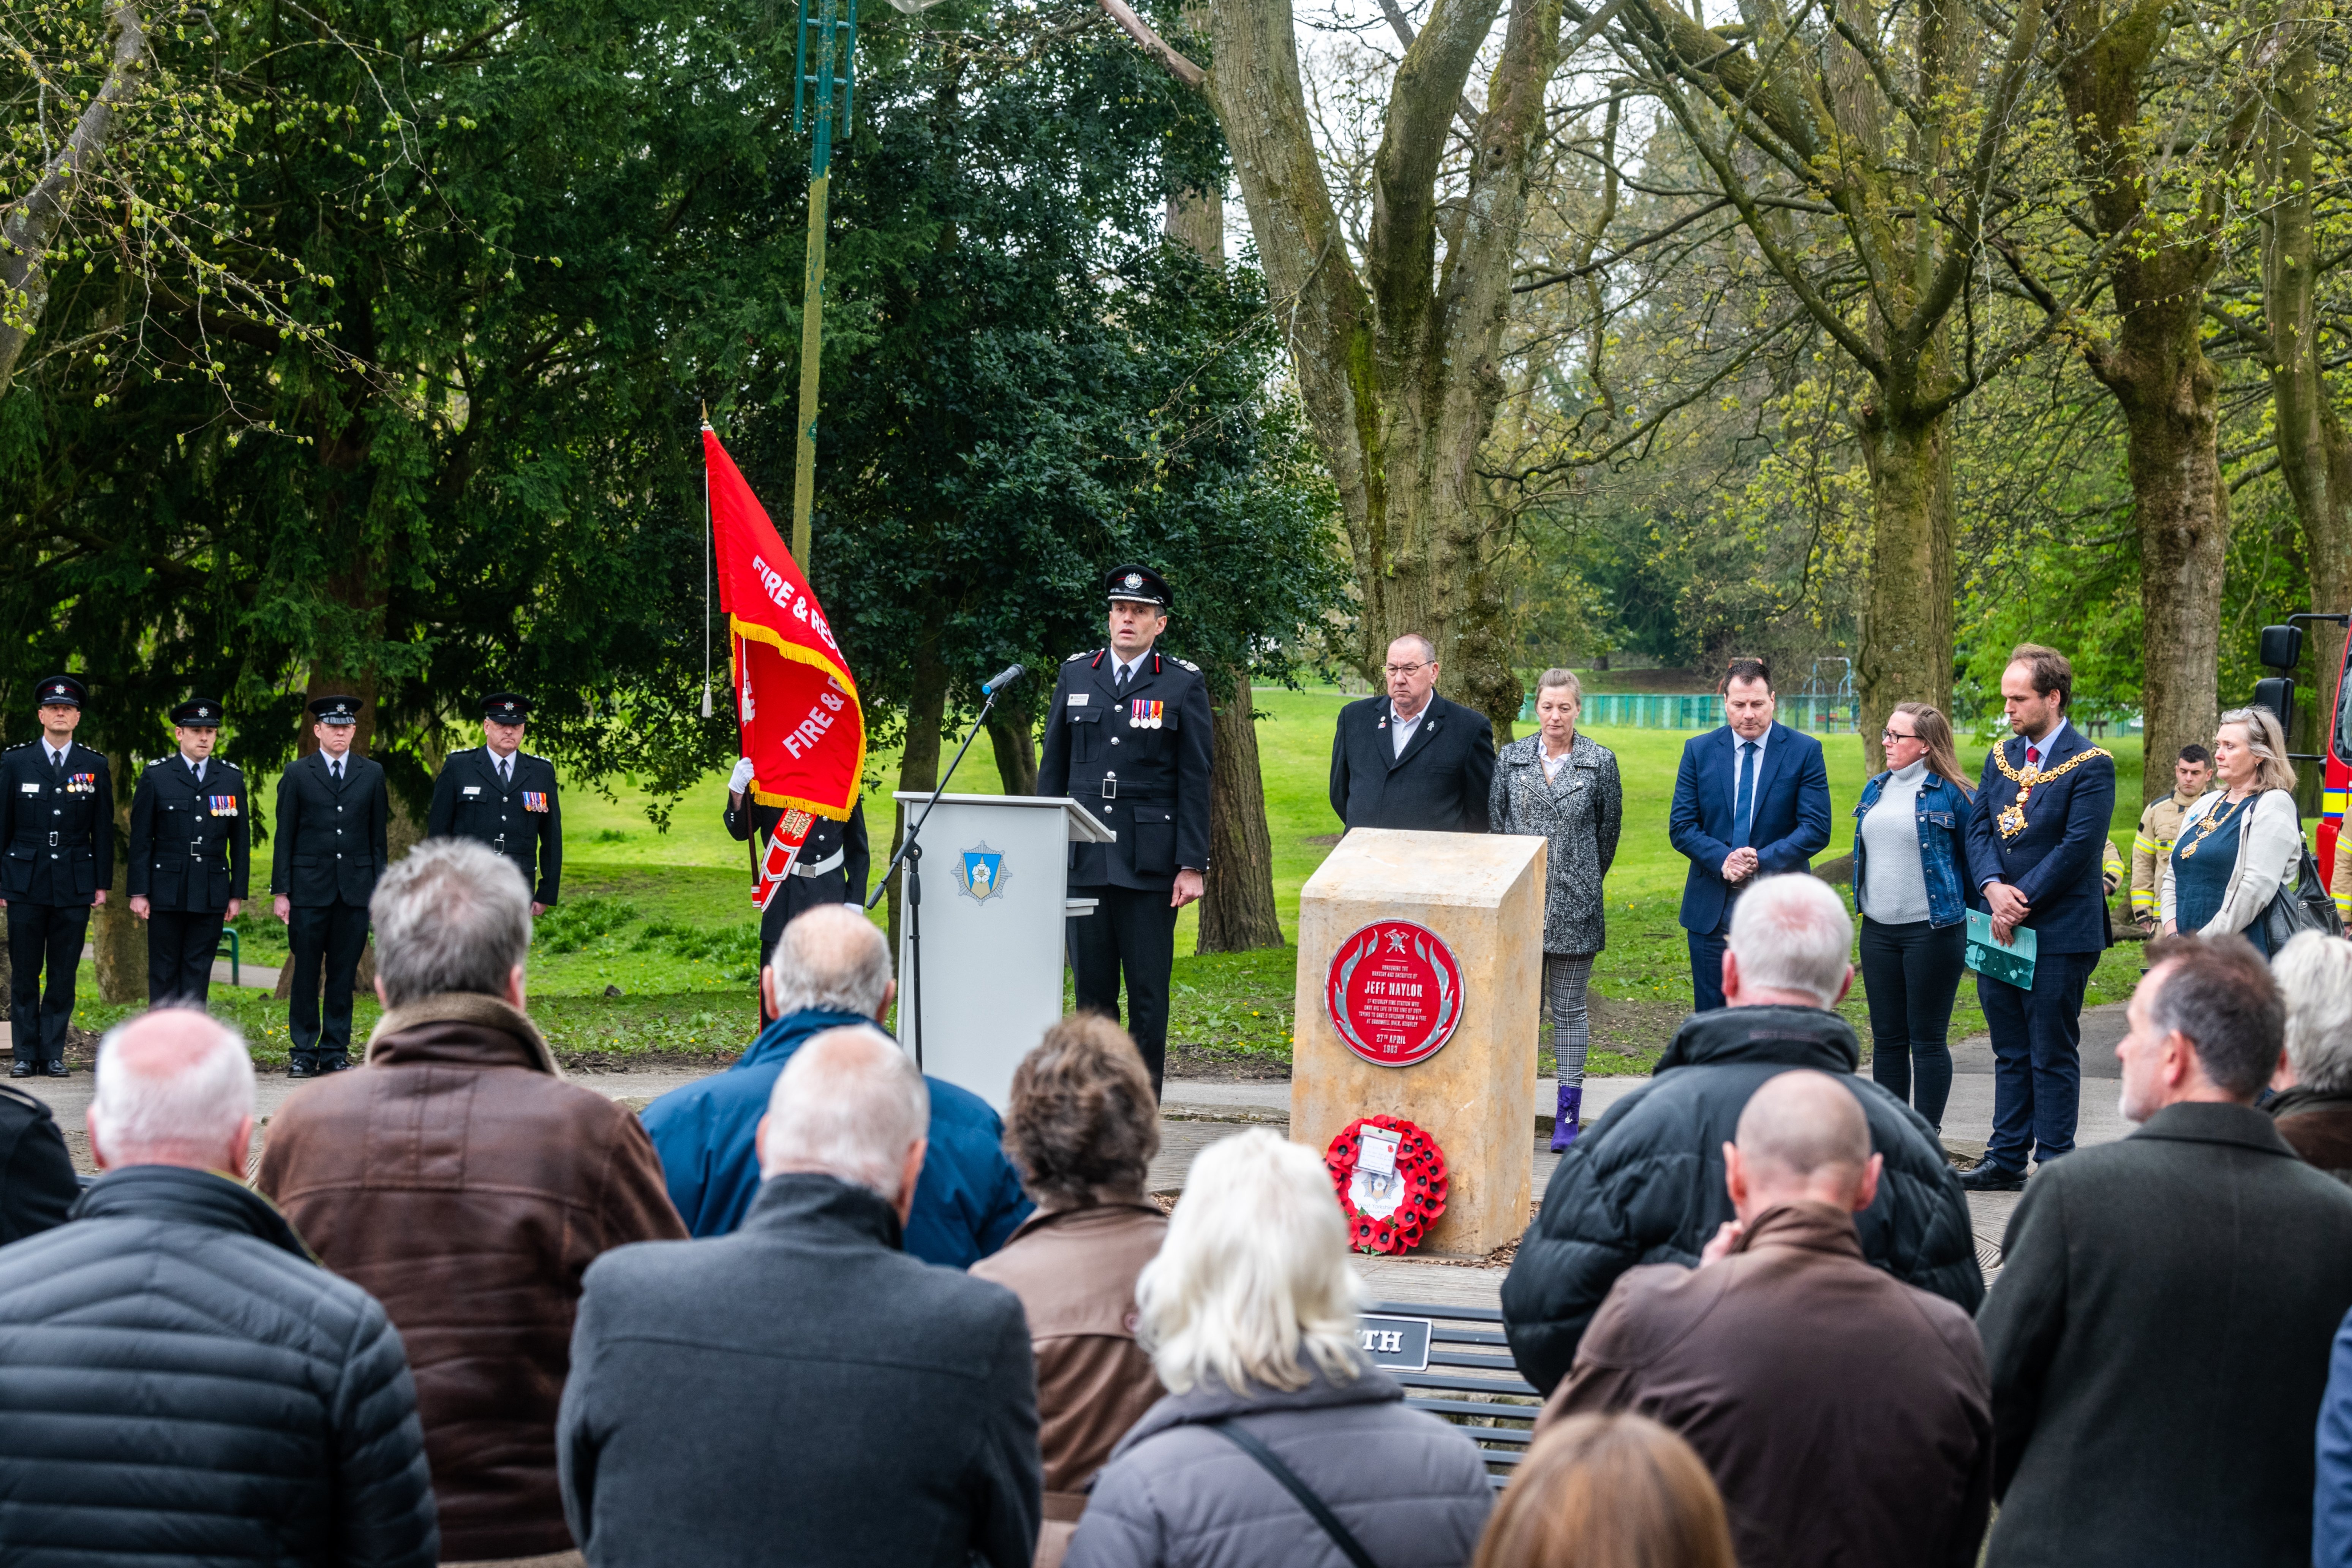 Jeff Naylor memorial ceremony in Lund Park